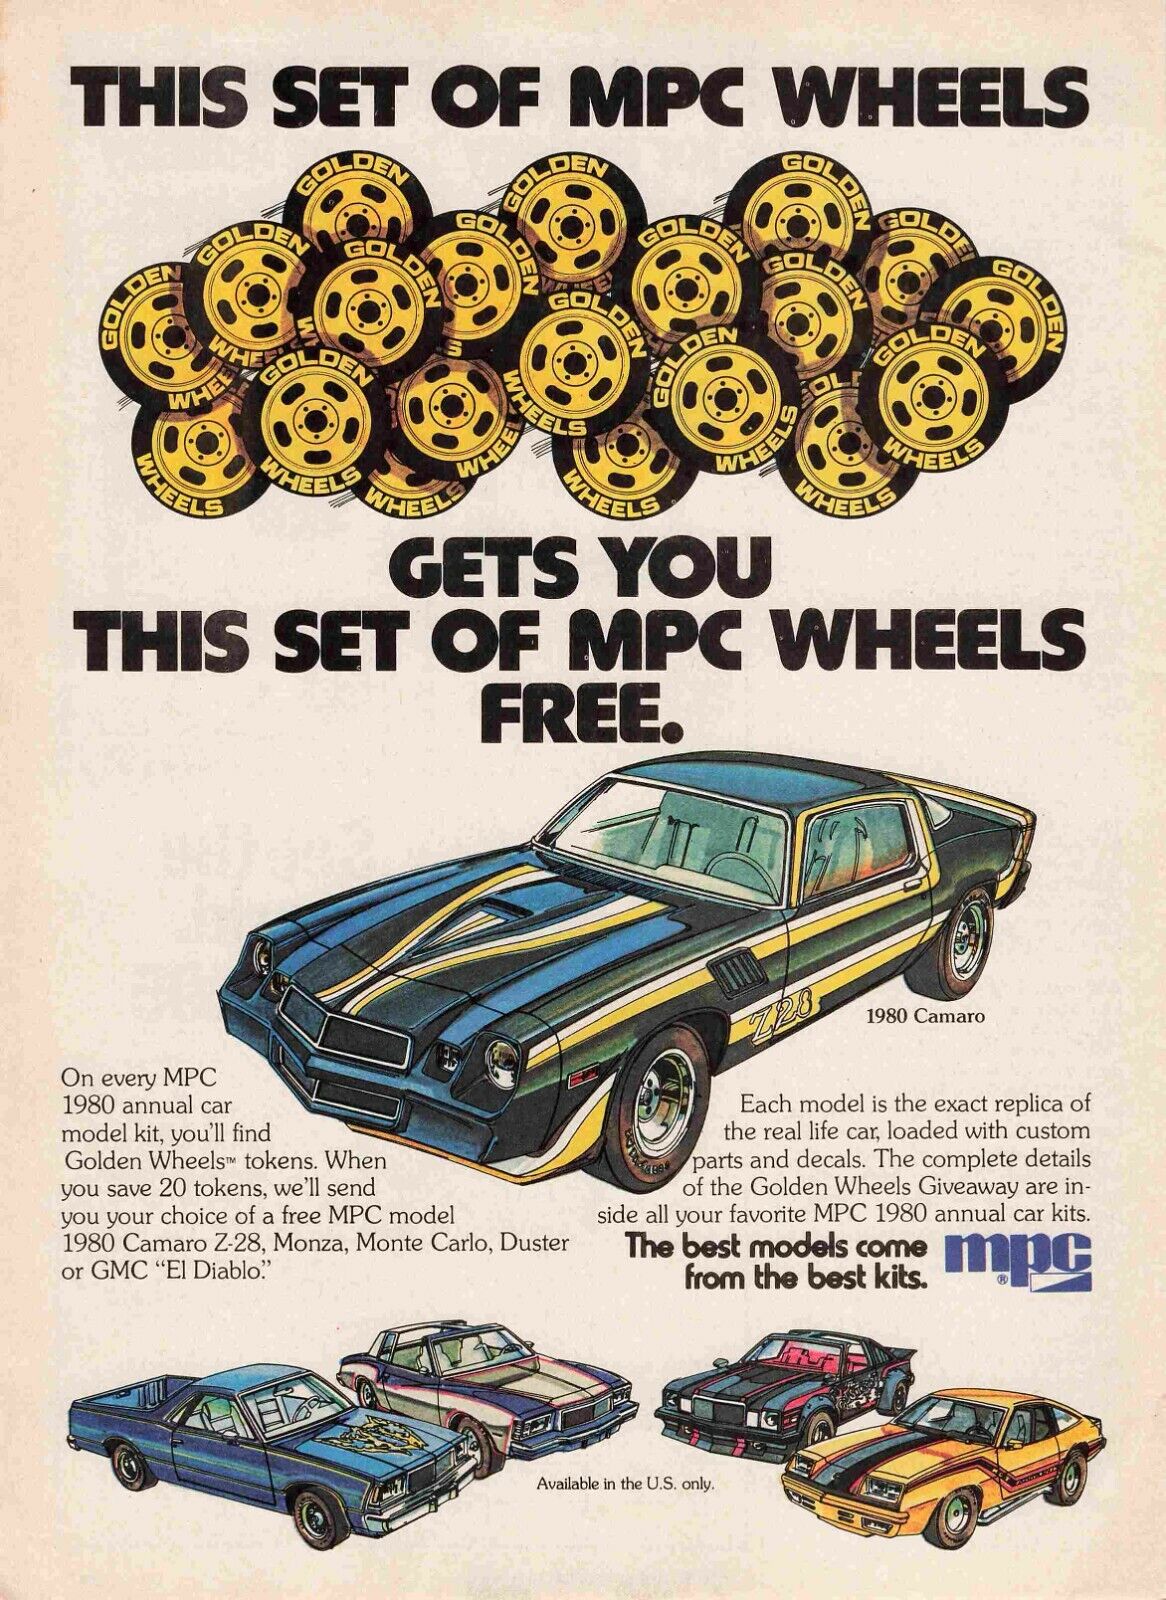 1980 Camaro Mpc Wheels Kit Model Ad 1970S Vtg Print Ad 8X11 Wall Poster Art